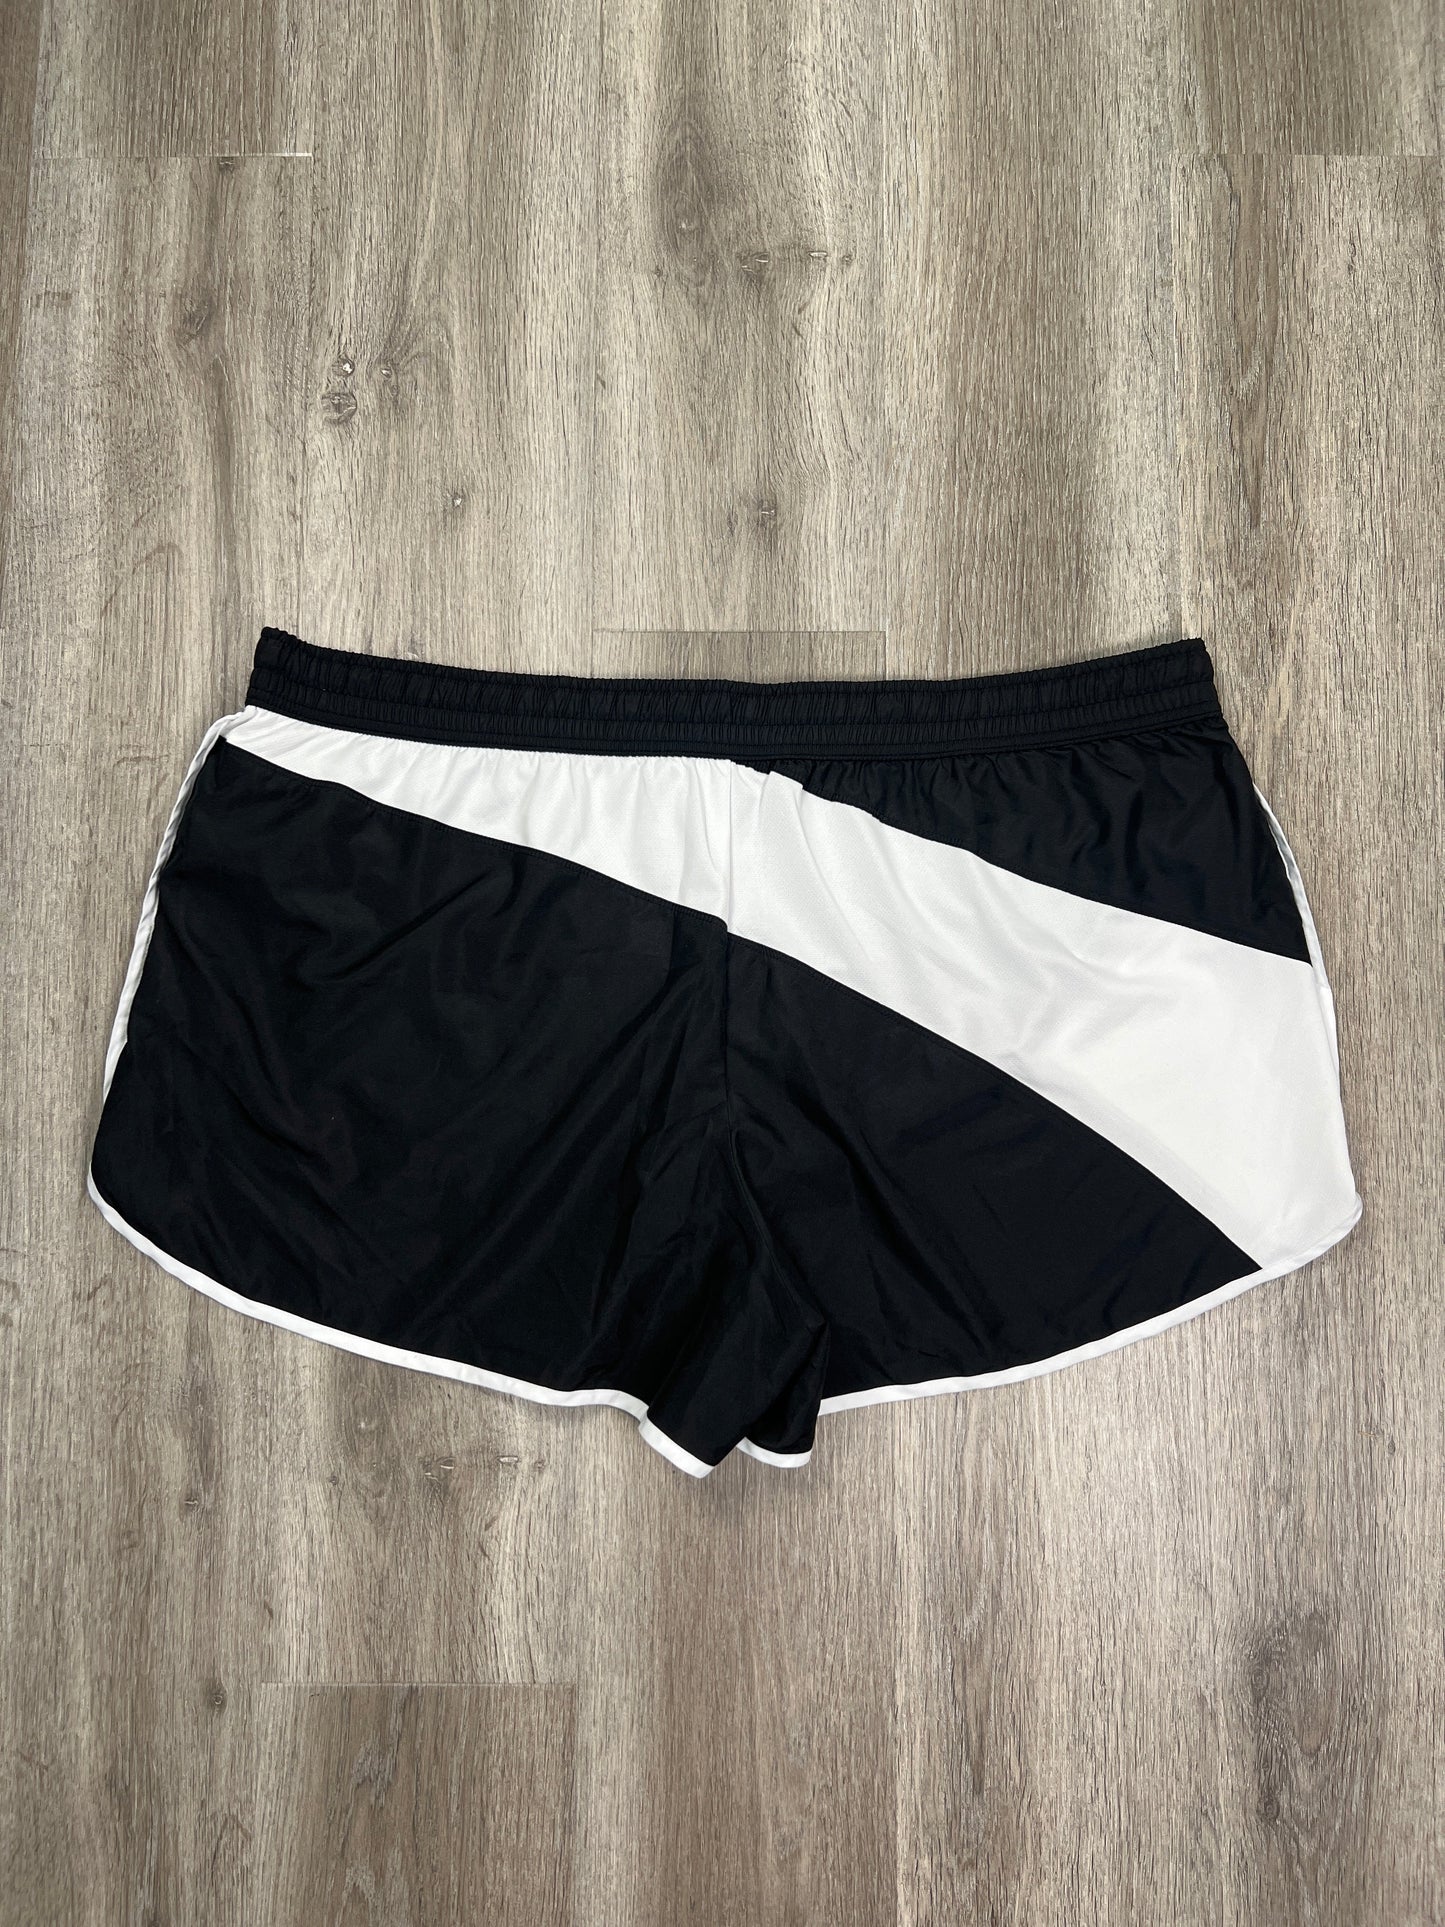 Black & White Athletic Shorts Fila, Size 2x